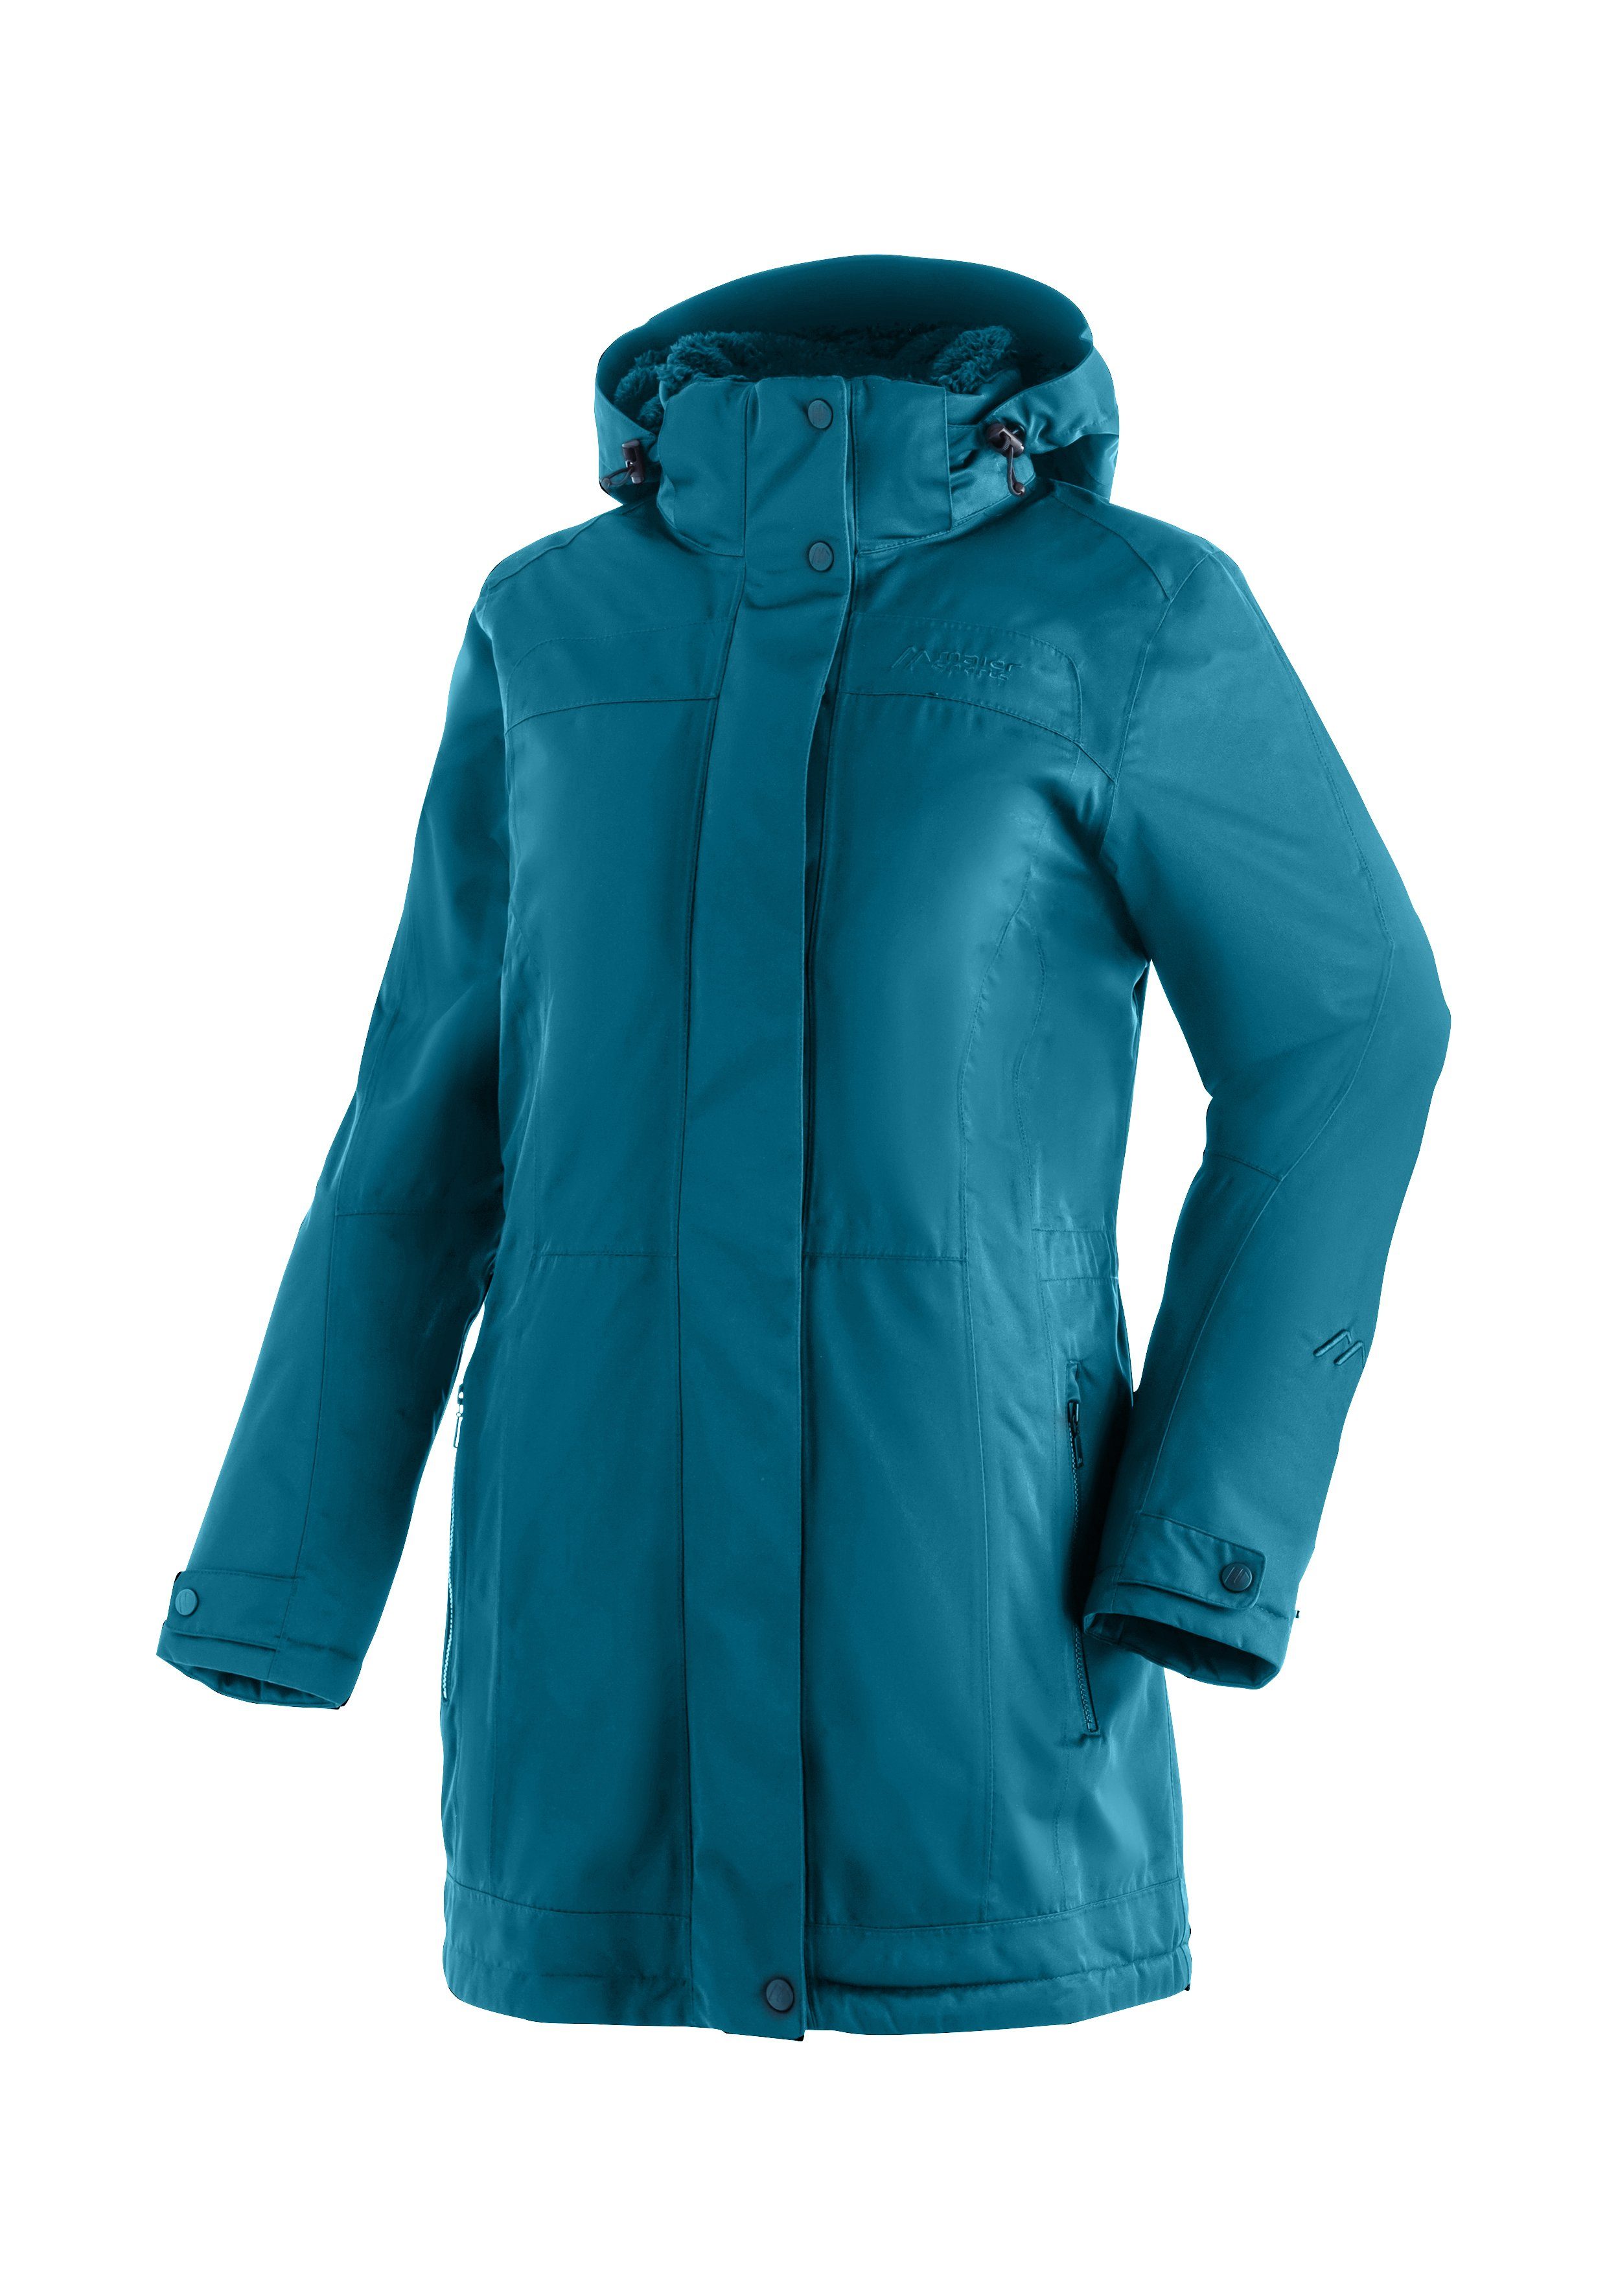 Maier Sports Funktionsjacke Lisa 2 Outdoor-Mantel mit vollem Wetterschutz flaschengrün | Übergangsjacken